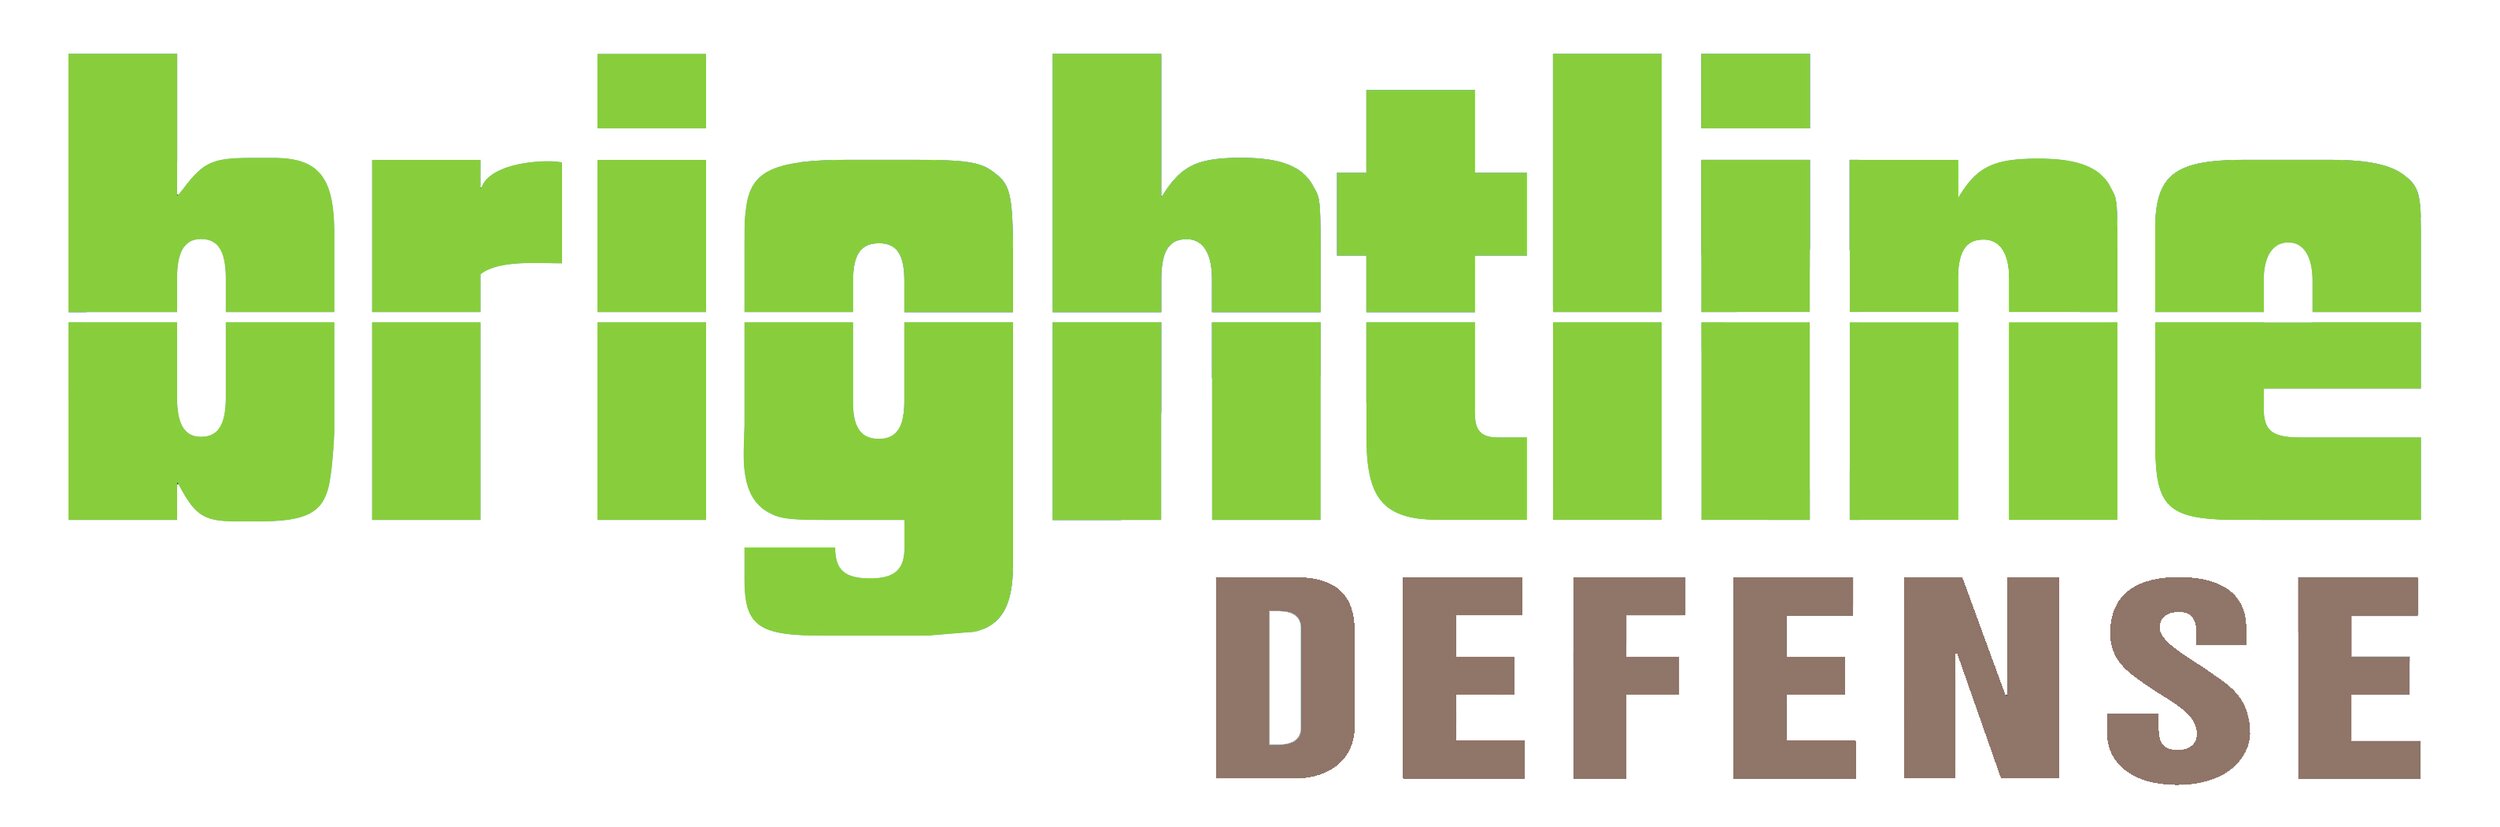 Brightline-logo-Feb2020 (1).jpg